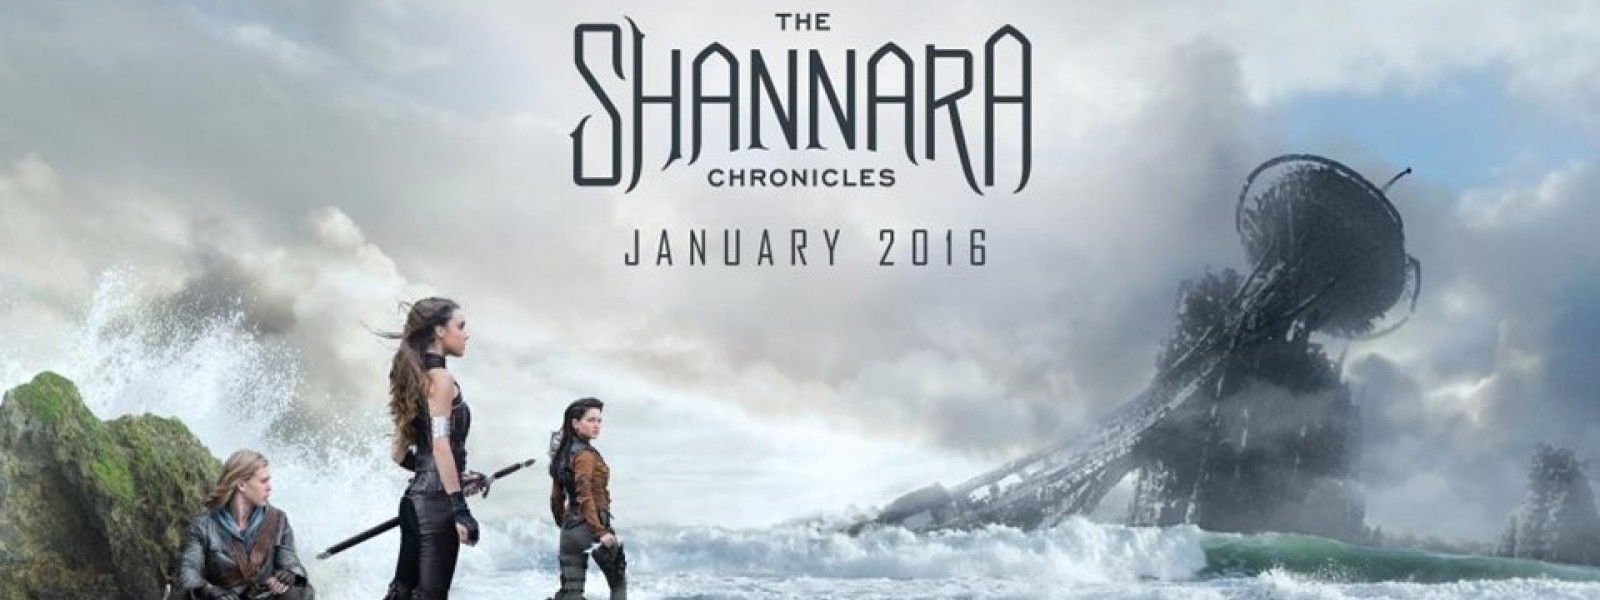 The Shannara Chronicles showcase